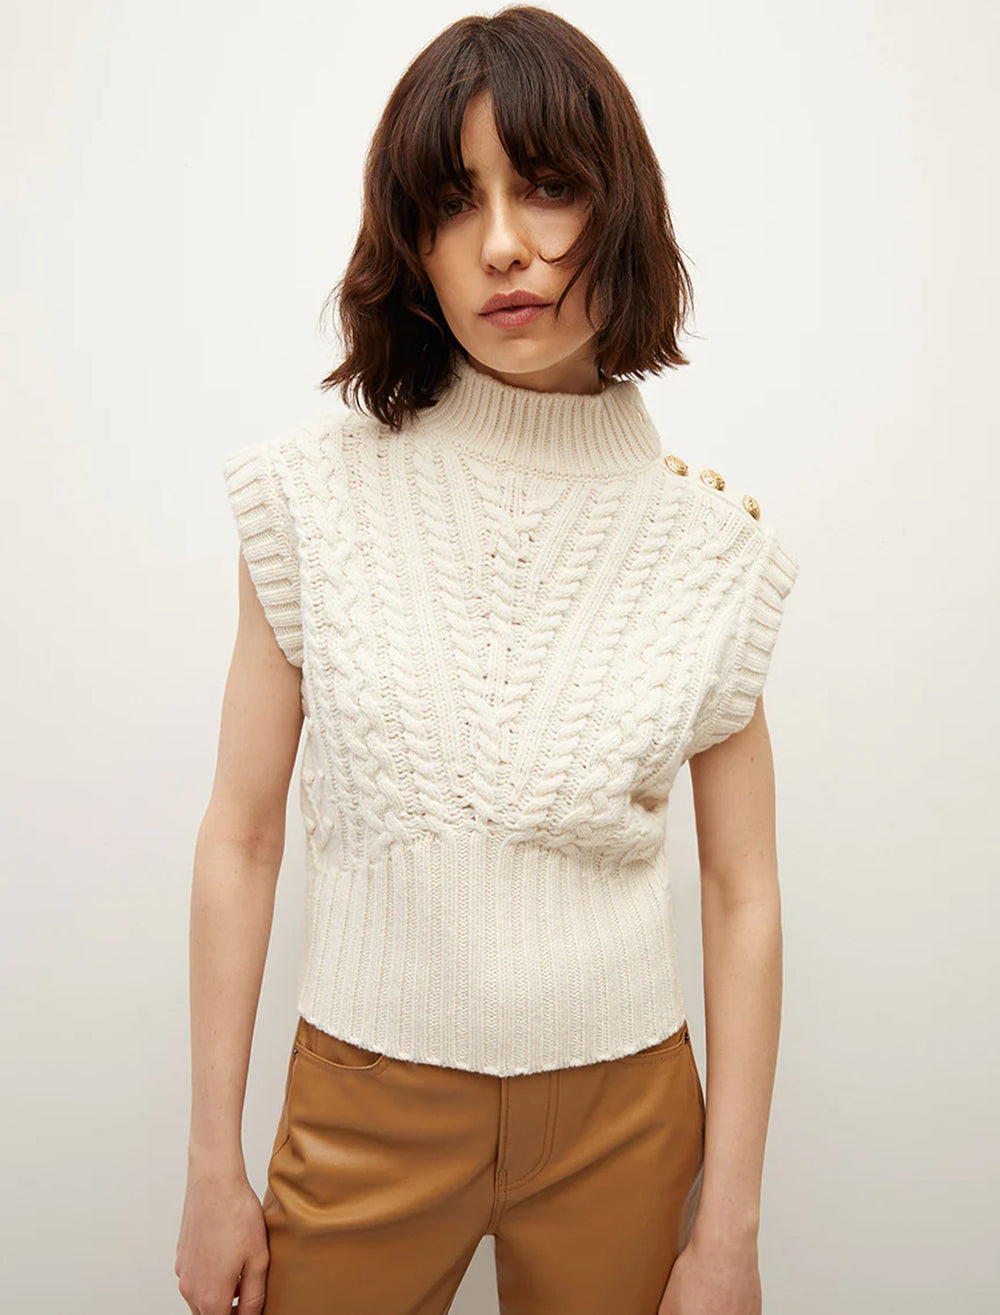 Model wearing Veronica Beard's holton knit vest in off white.